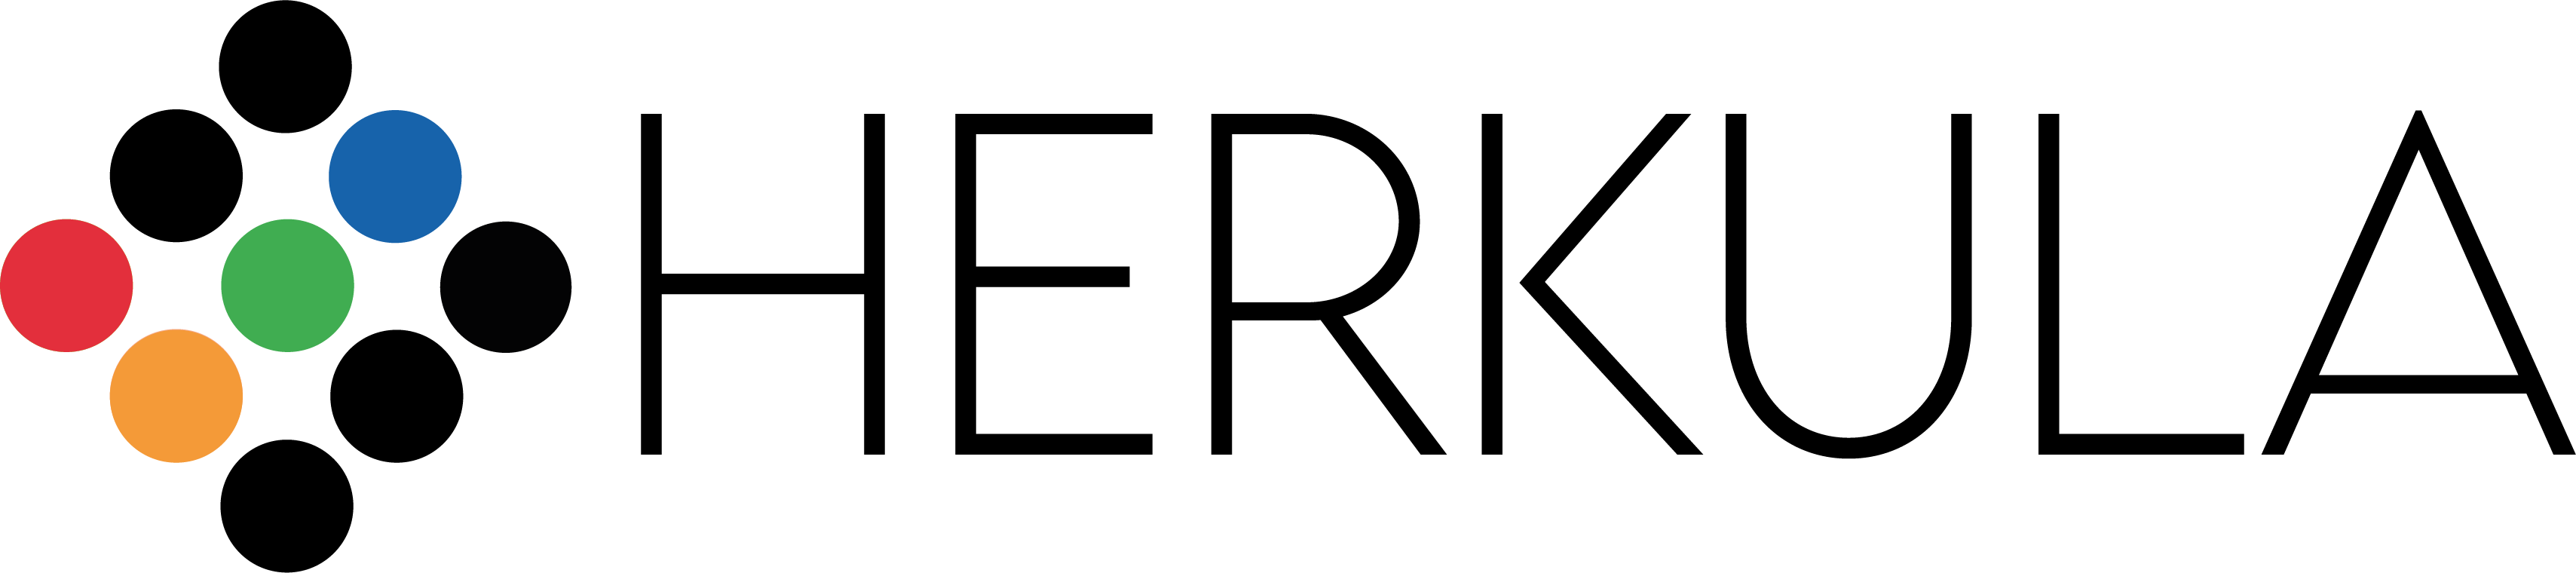 Logo Herkula